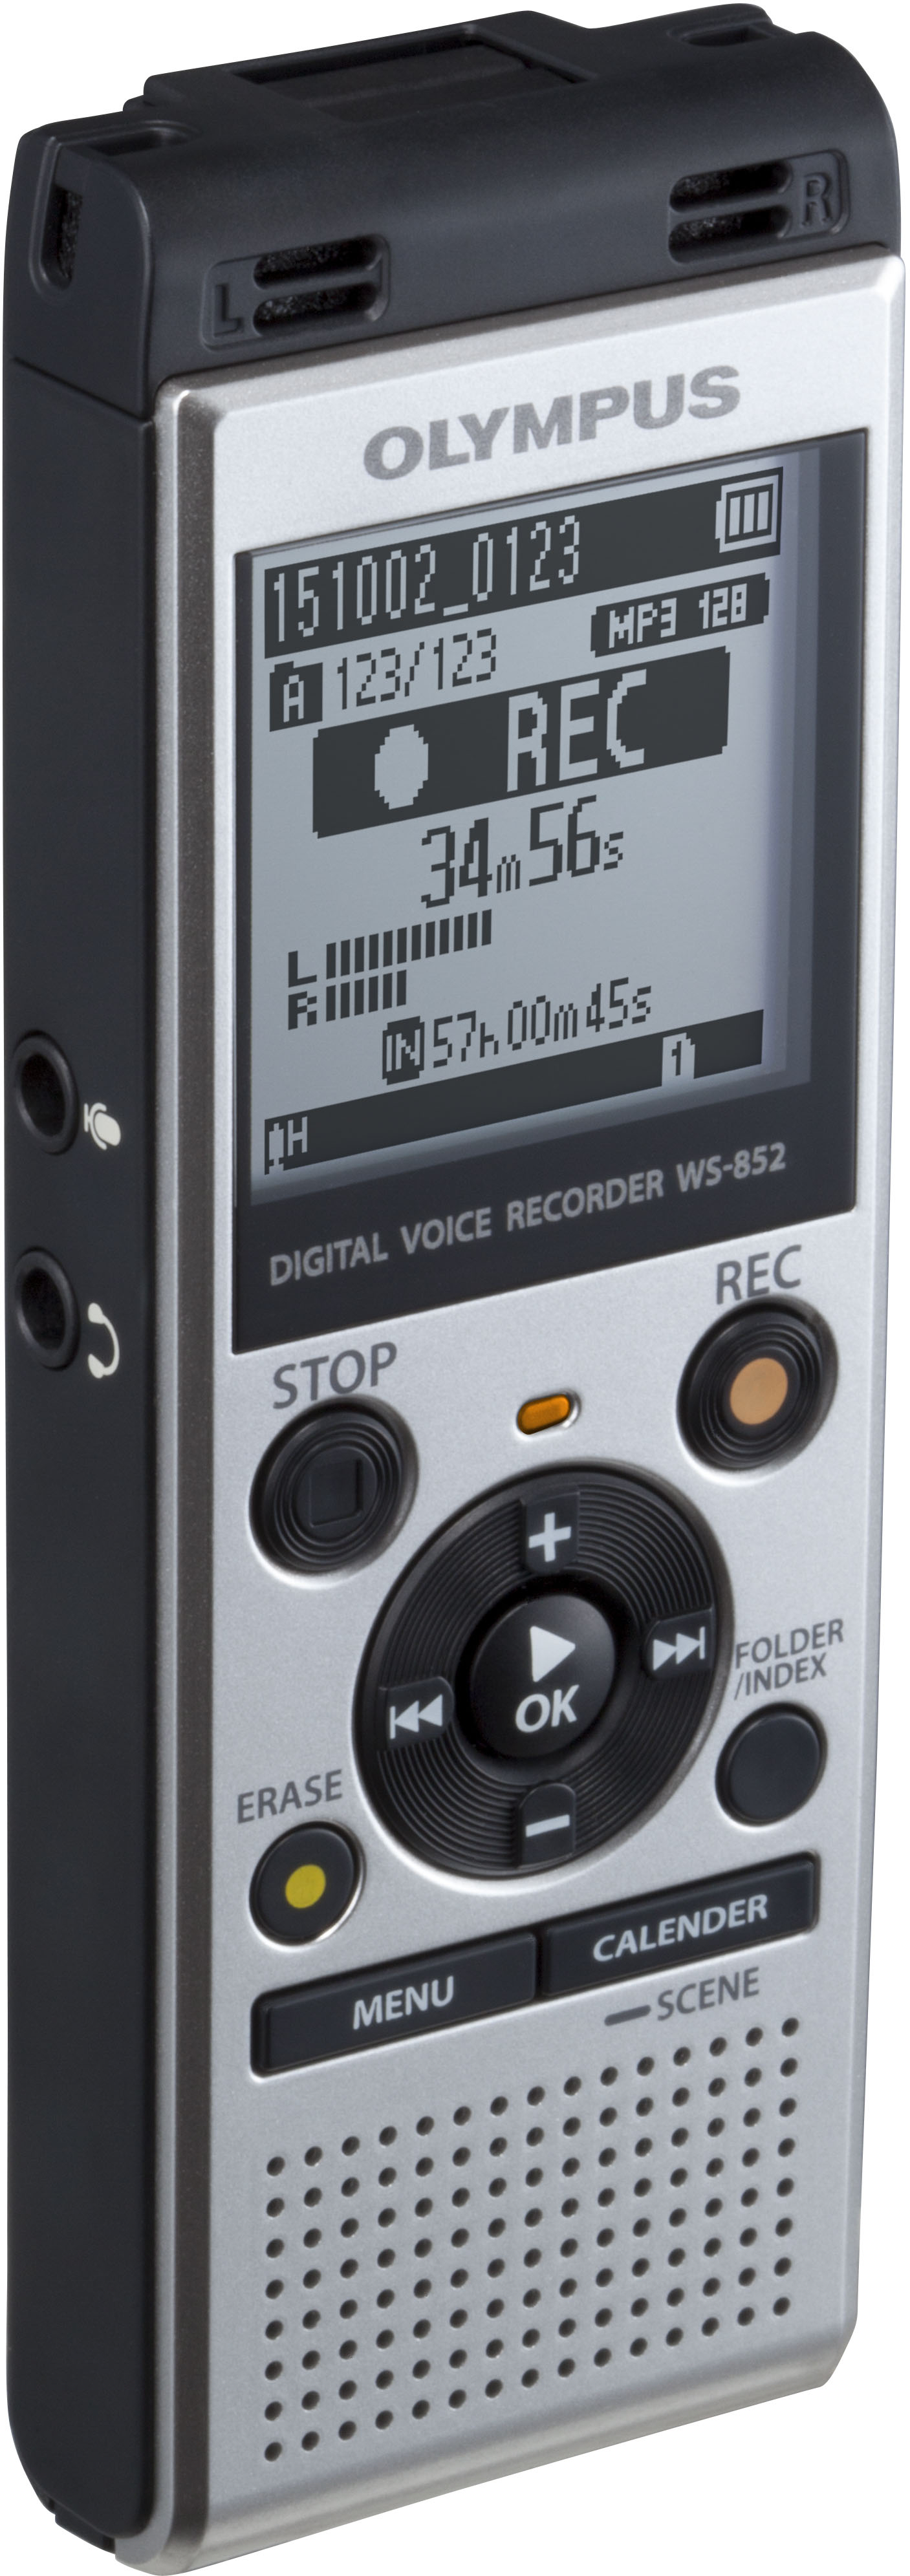 Omgaan Manhattan Speeltoestellen Best Buy: Olympus Digital Voice Recorder Silver V415121SU000